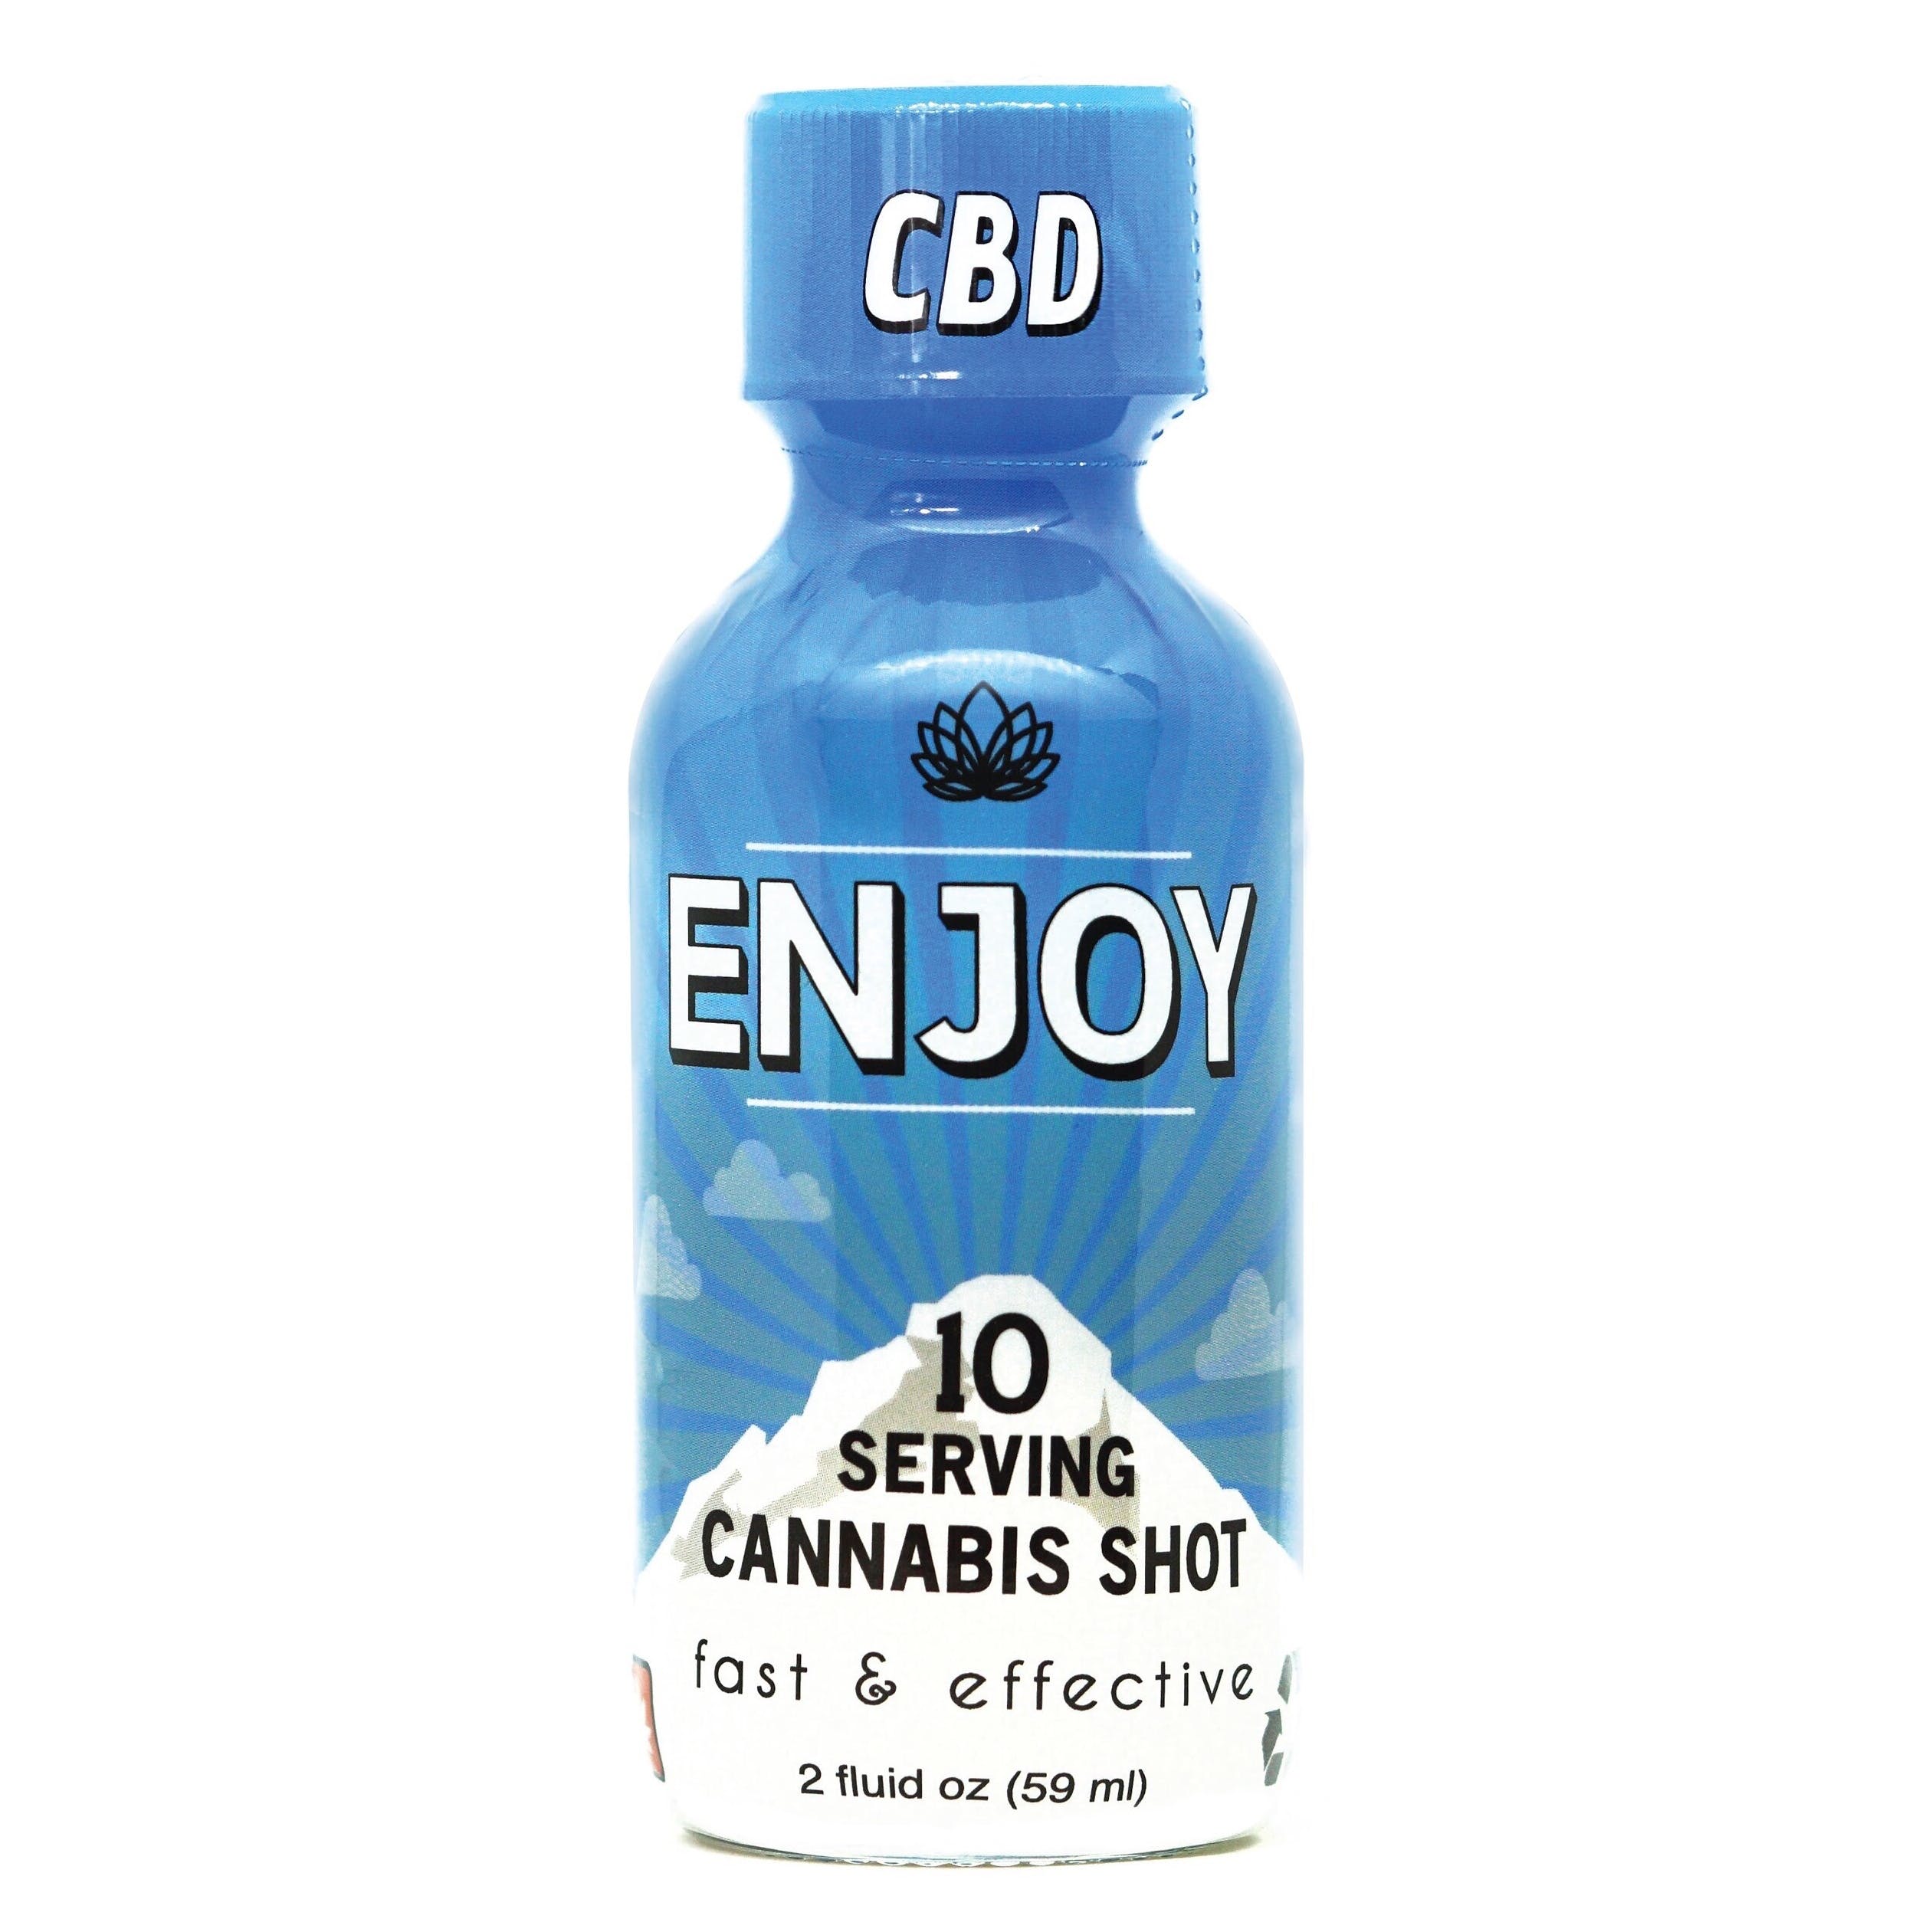 Enjoy - CBD Berry Citrus Cannabis Shot 2oz